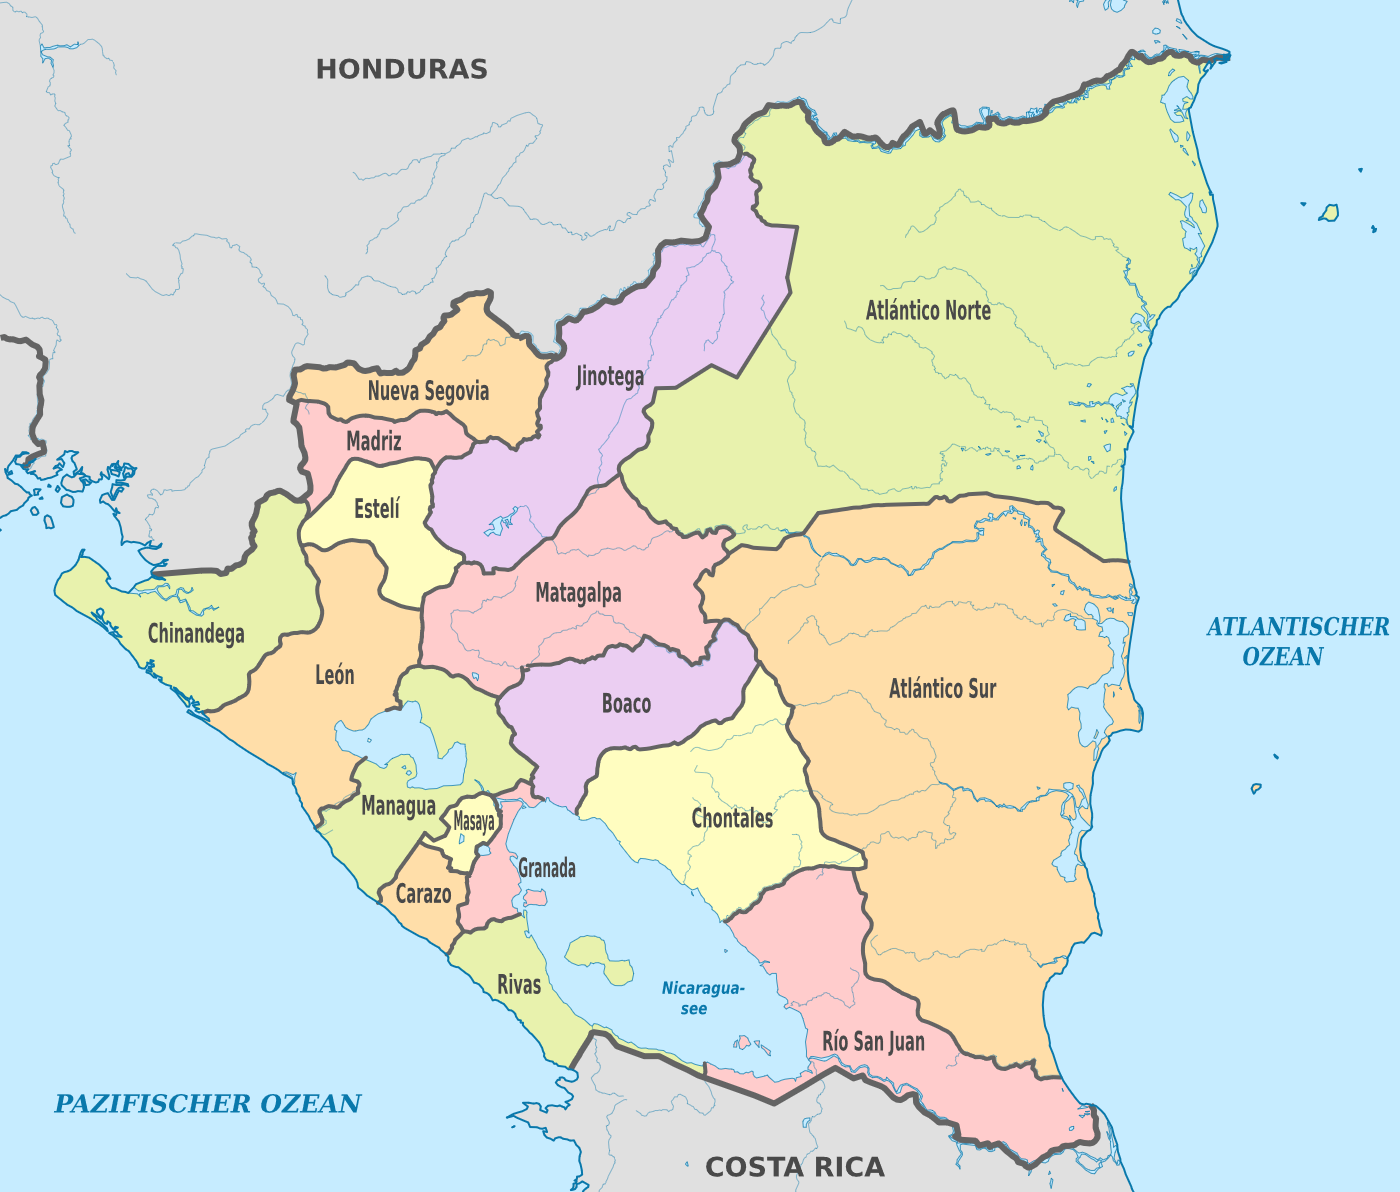 Mapa De Nicaragua Con Nombres Departamentos Y Municipios Para Descargar E Imprimir